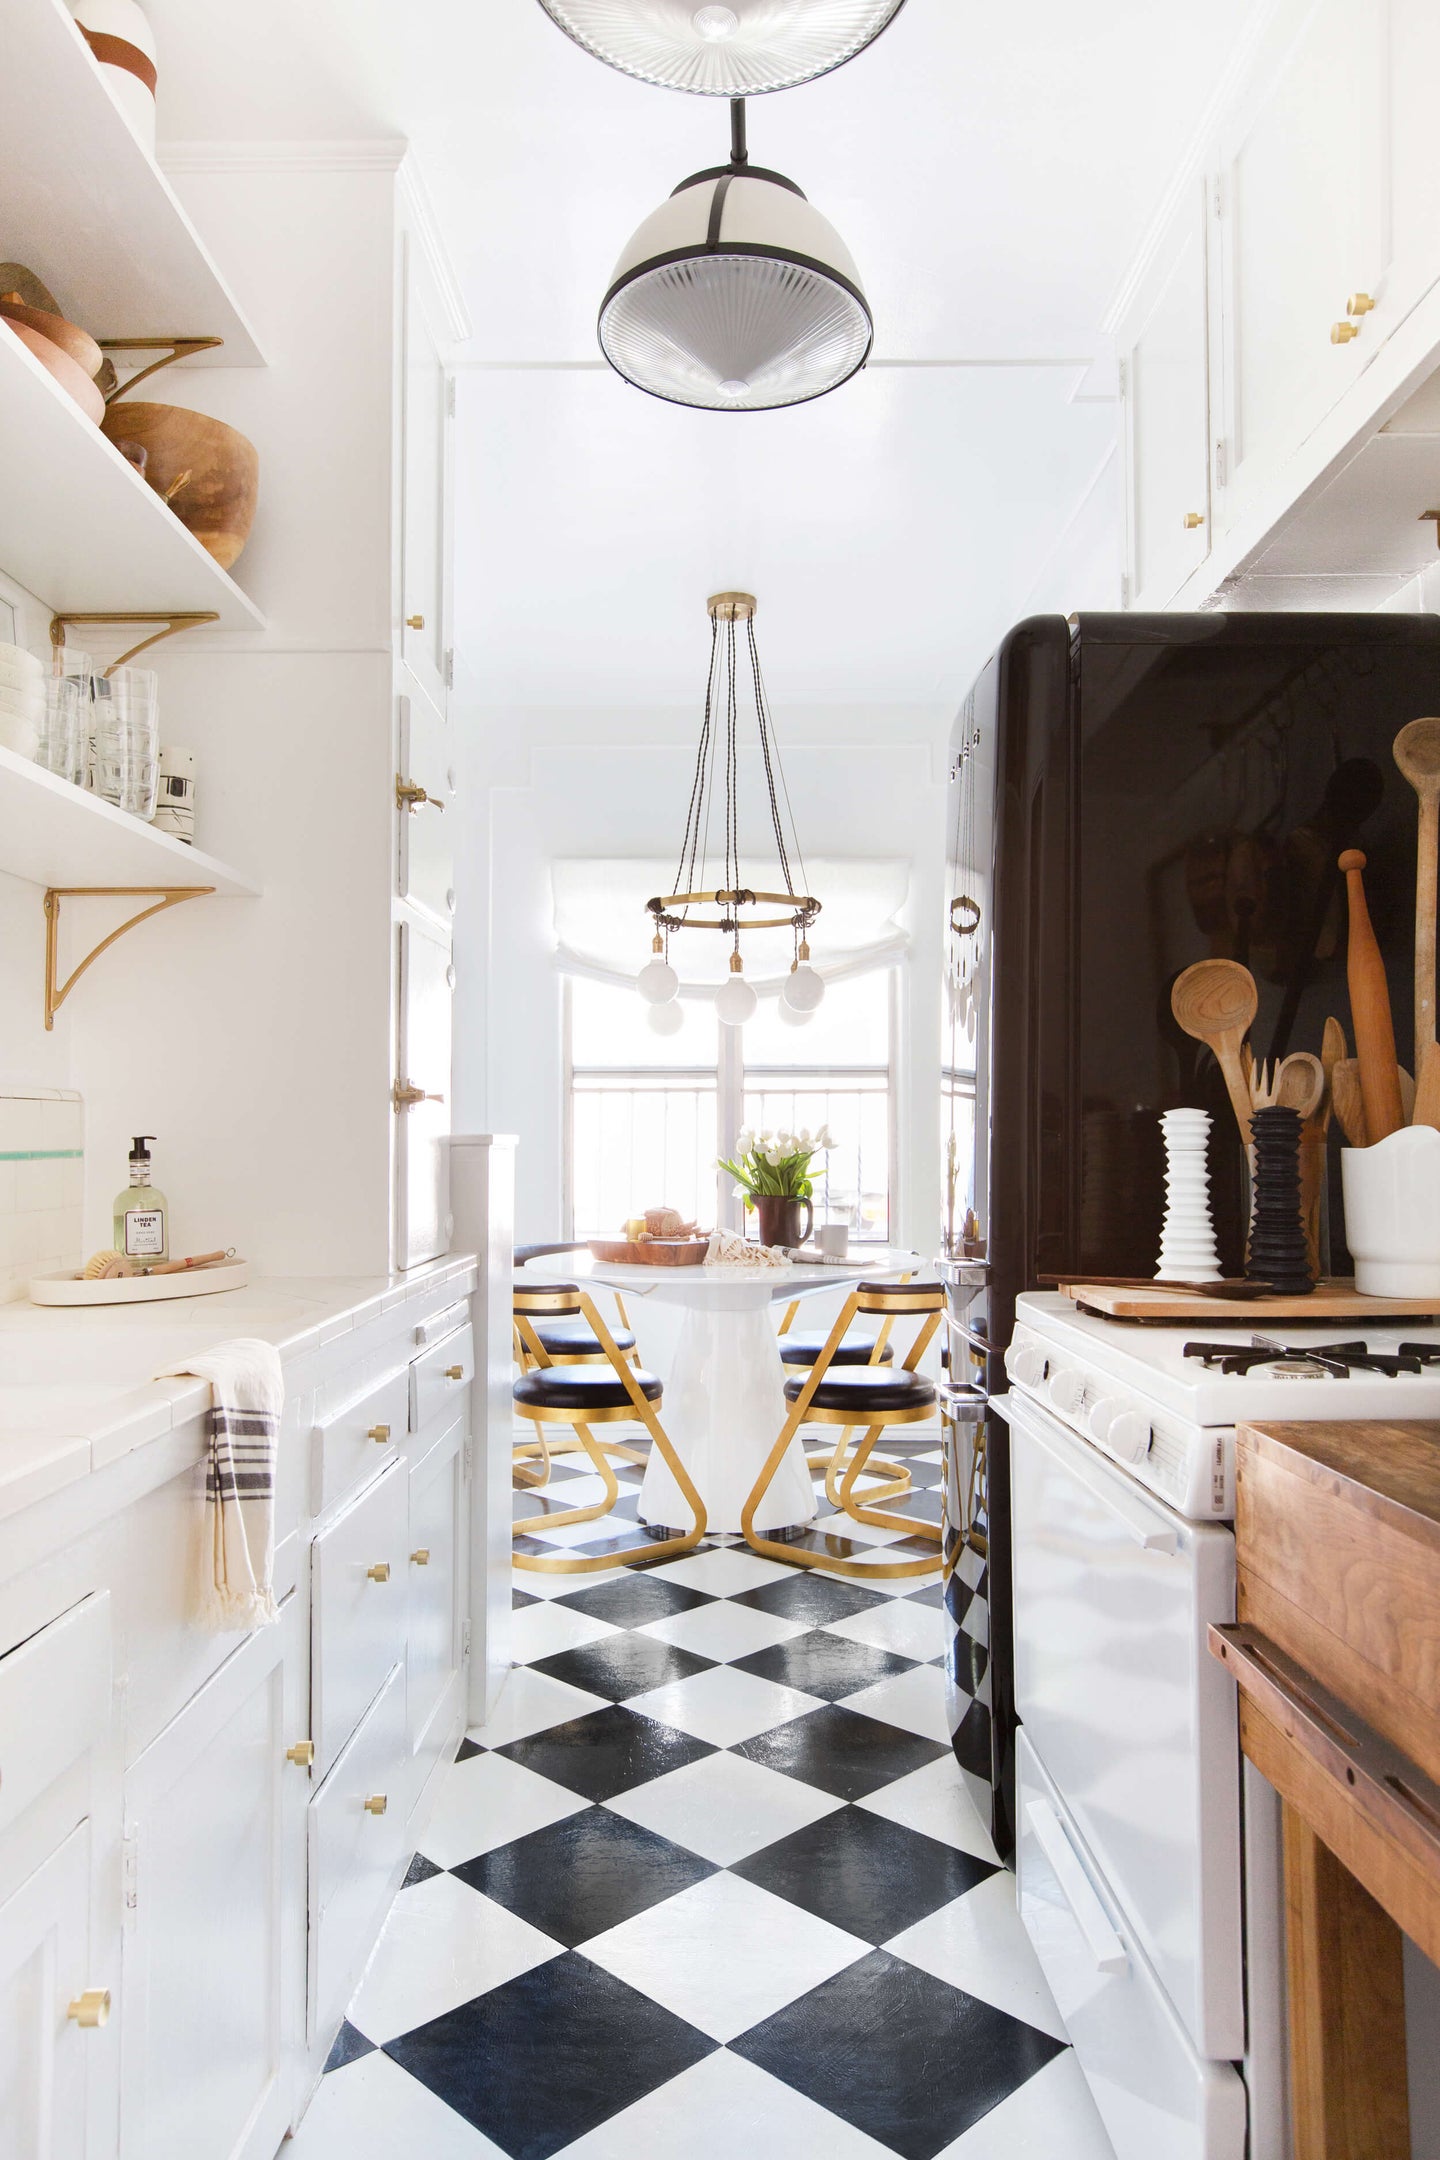 Checkerboard Kitchen Floor Ideas Retro, Black And White Kitchen Floor Tiles Ideas